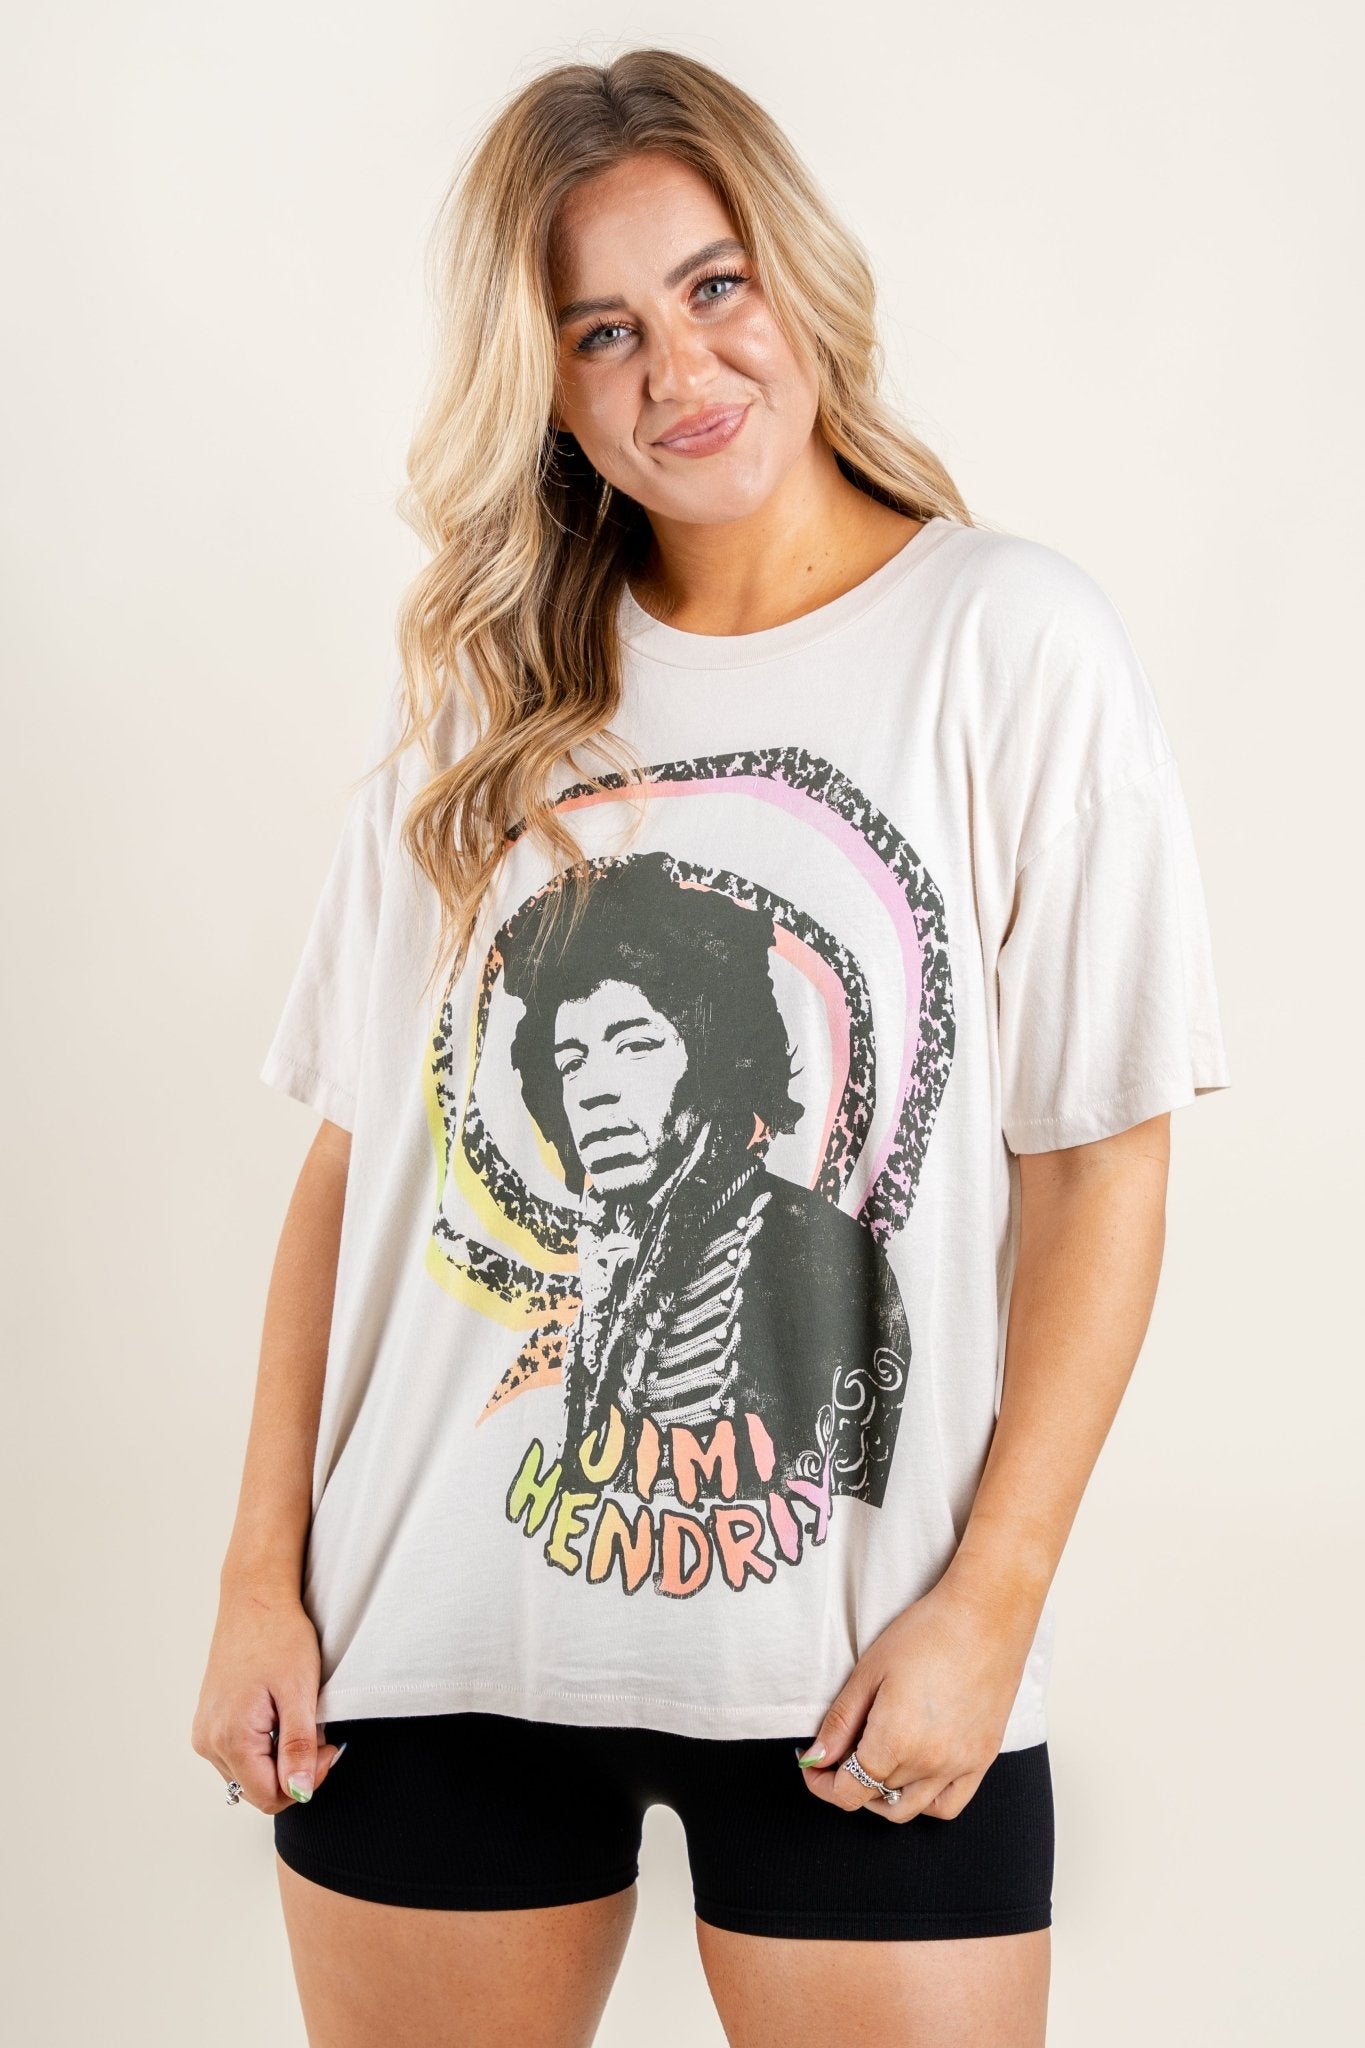 DayDreamer Jimi Hendrix spiral t-shirt dirty white - Stylish Band T-Shirts and Sweatshirts at Lush Fashion Lounge Boutique in Oklahoma City